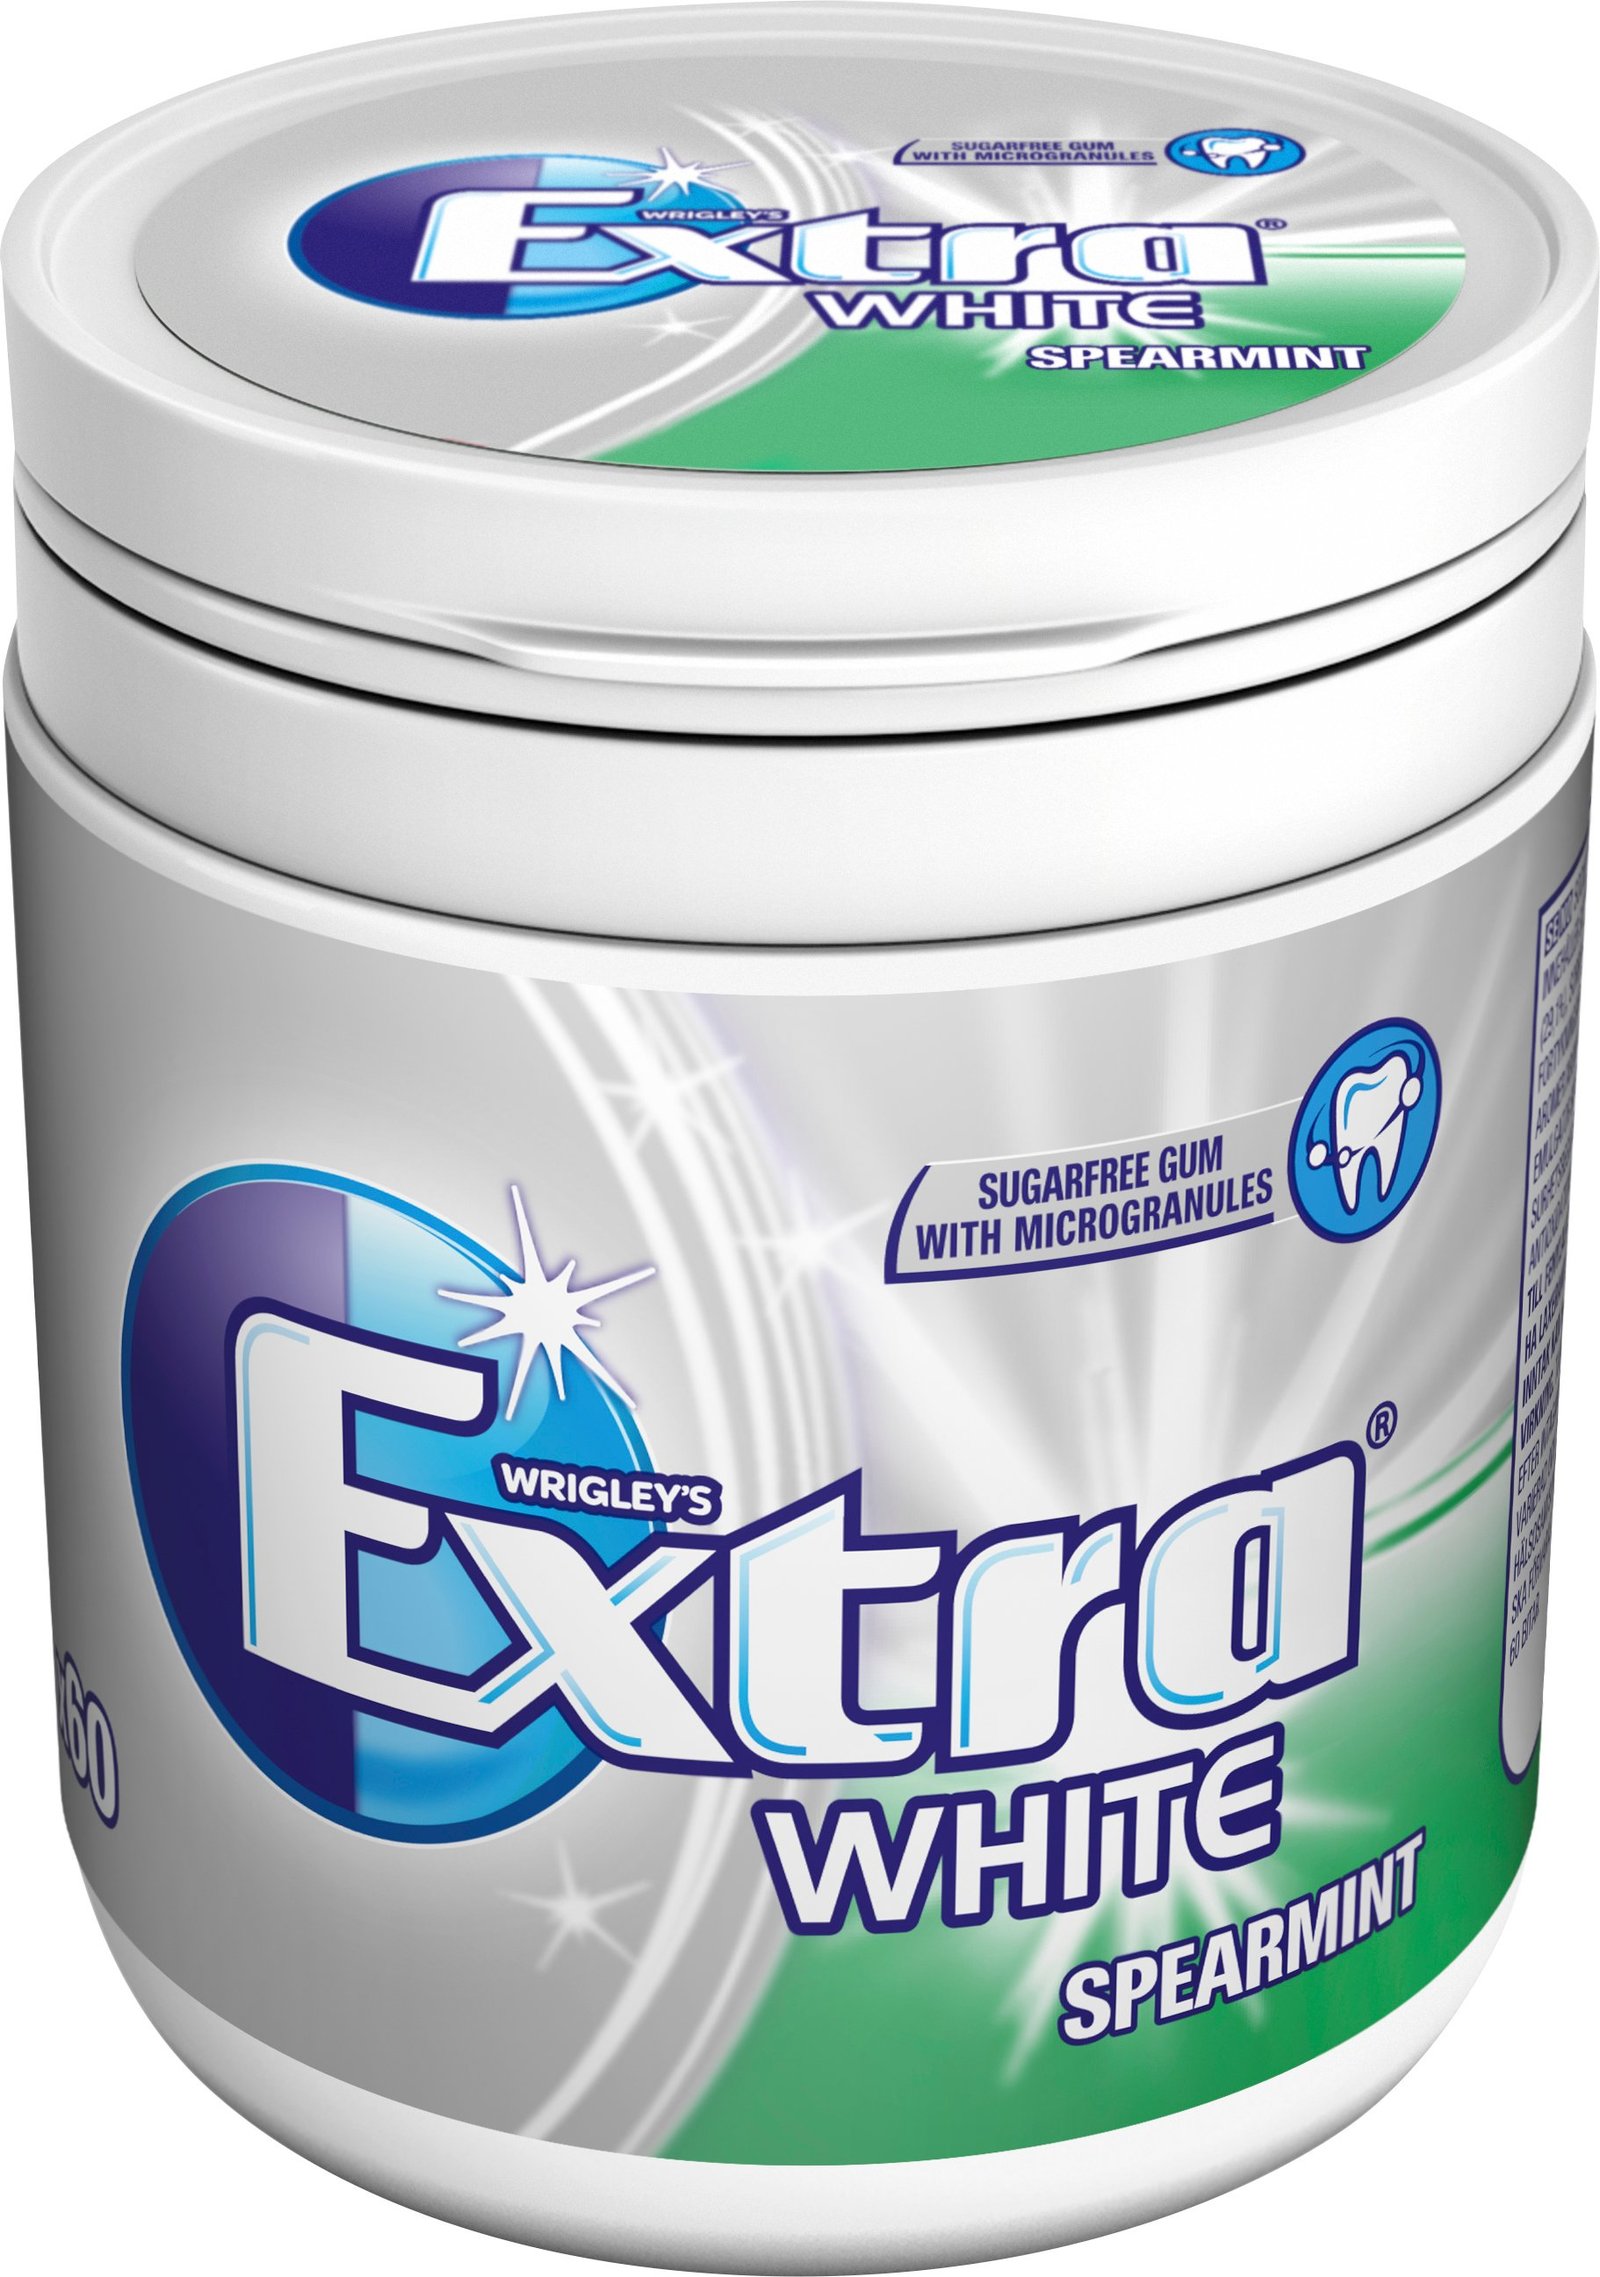 Extra Professional White Spearmint 84g